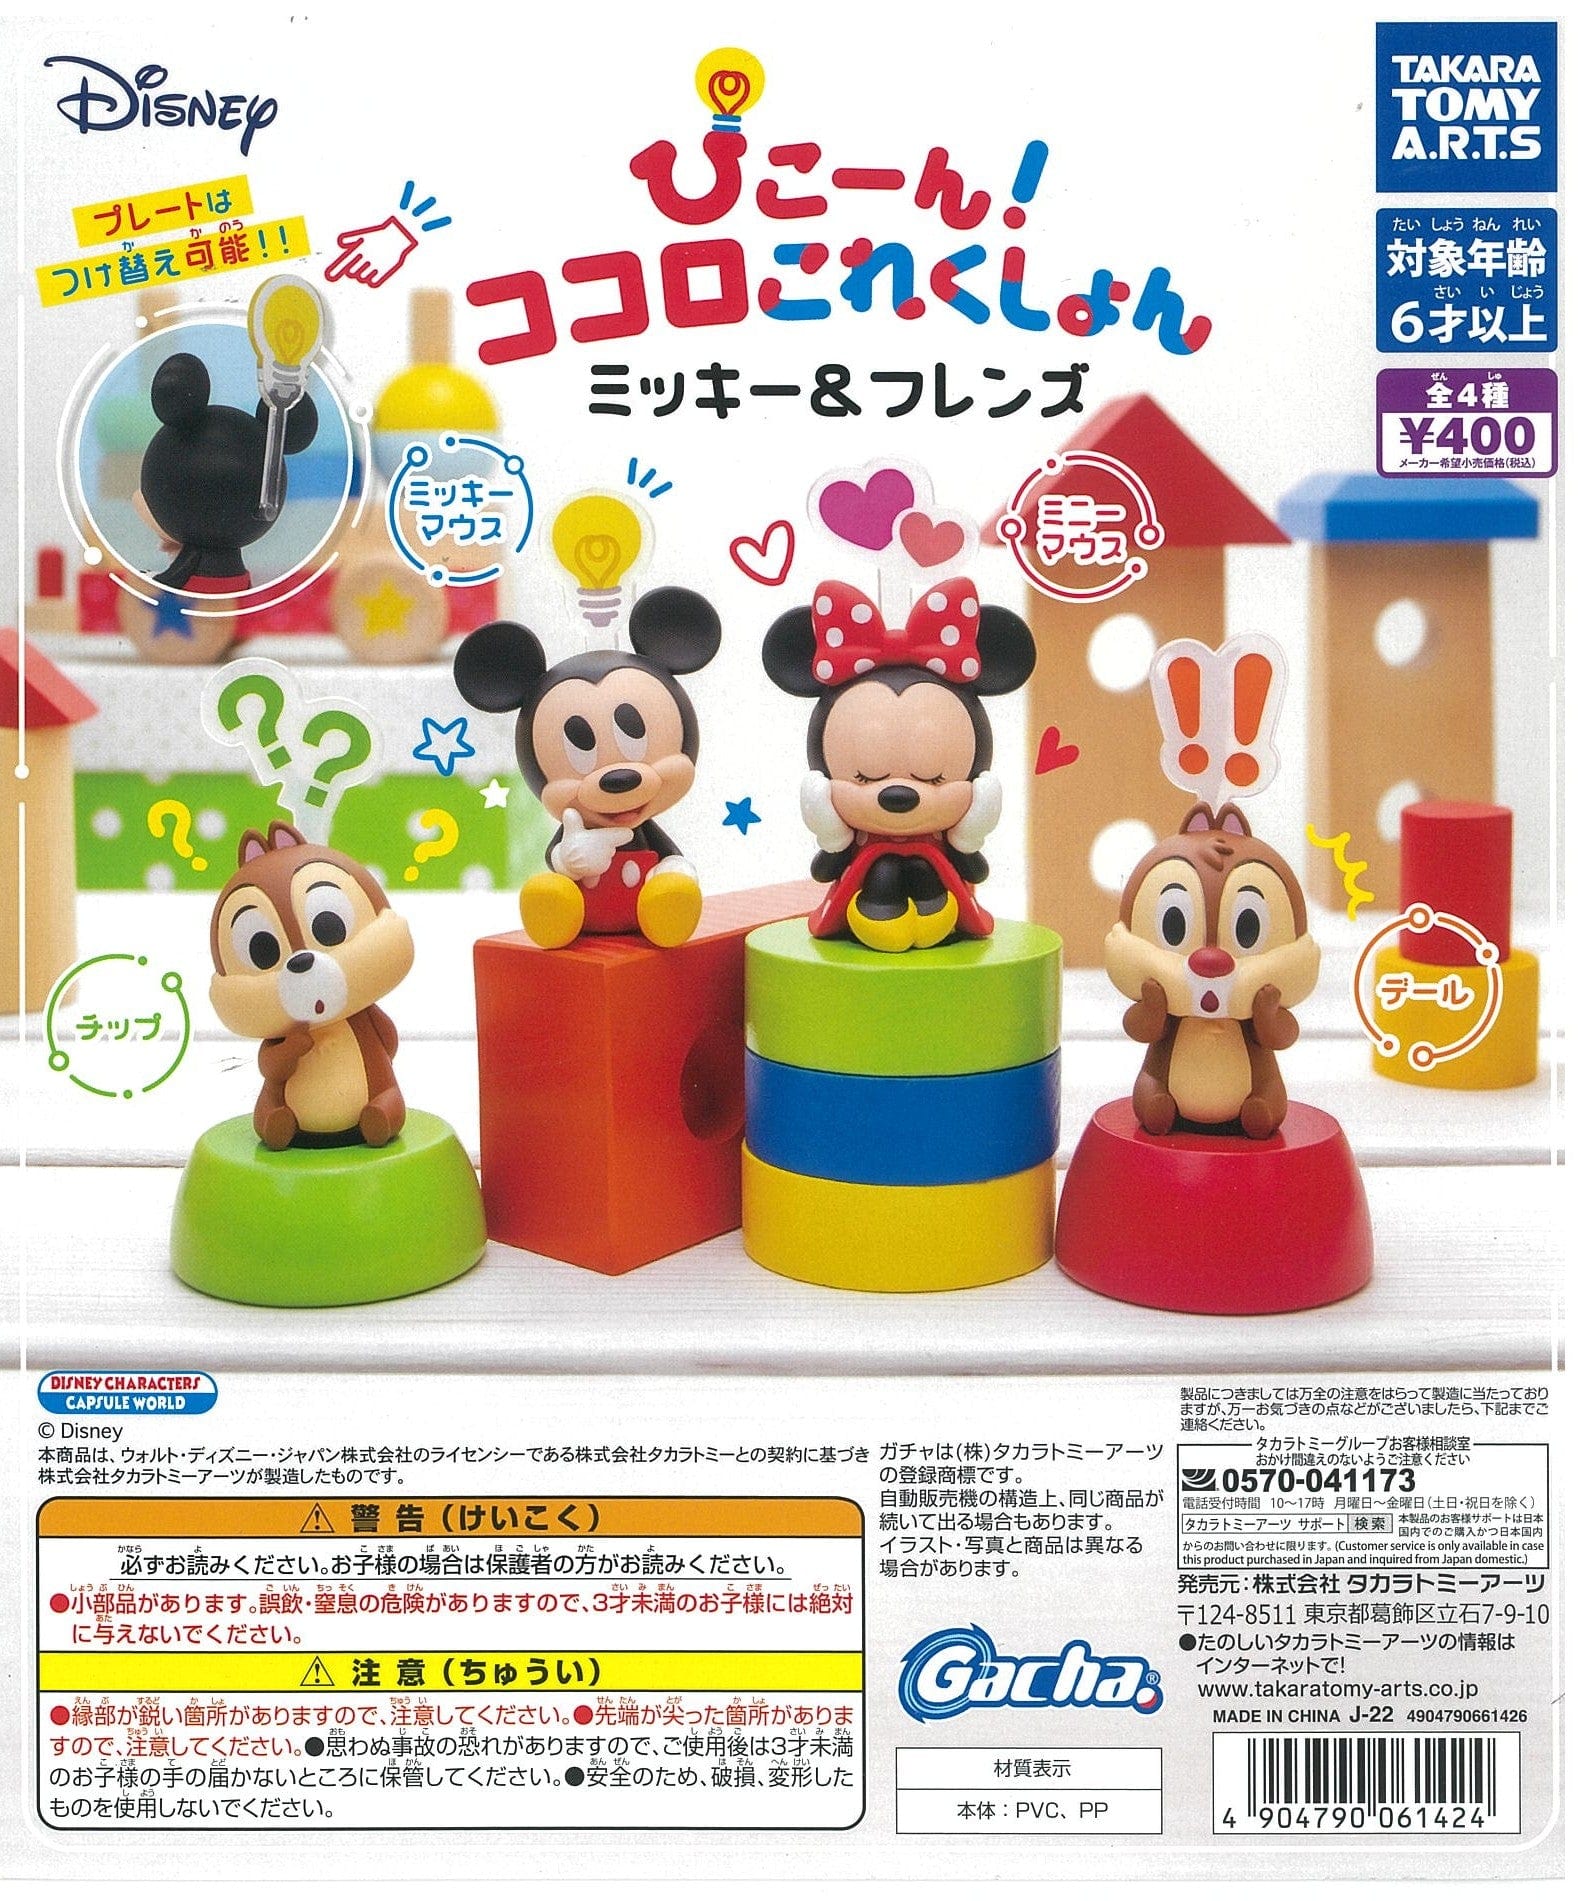 Takara Tomy A.R.T.S CP2051 Pikon! Kokoro Collection Mickey & Friends